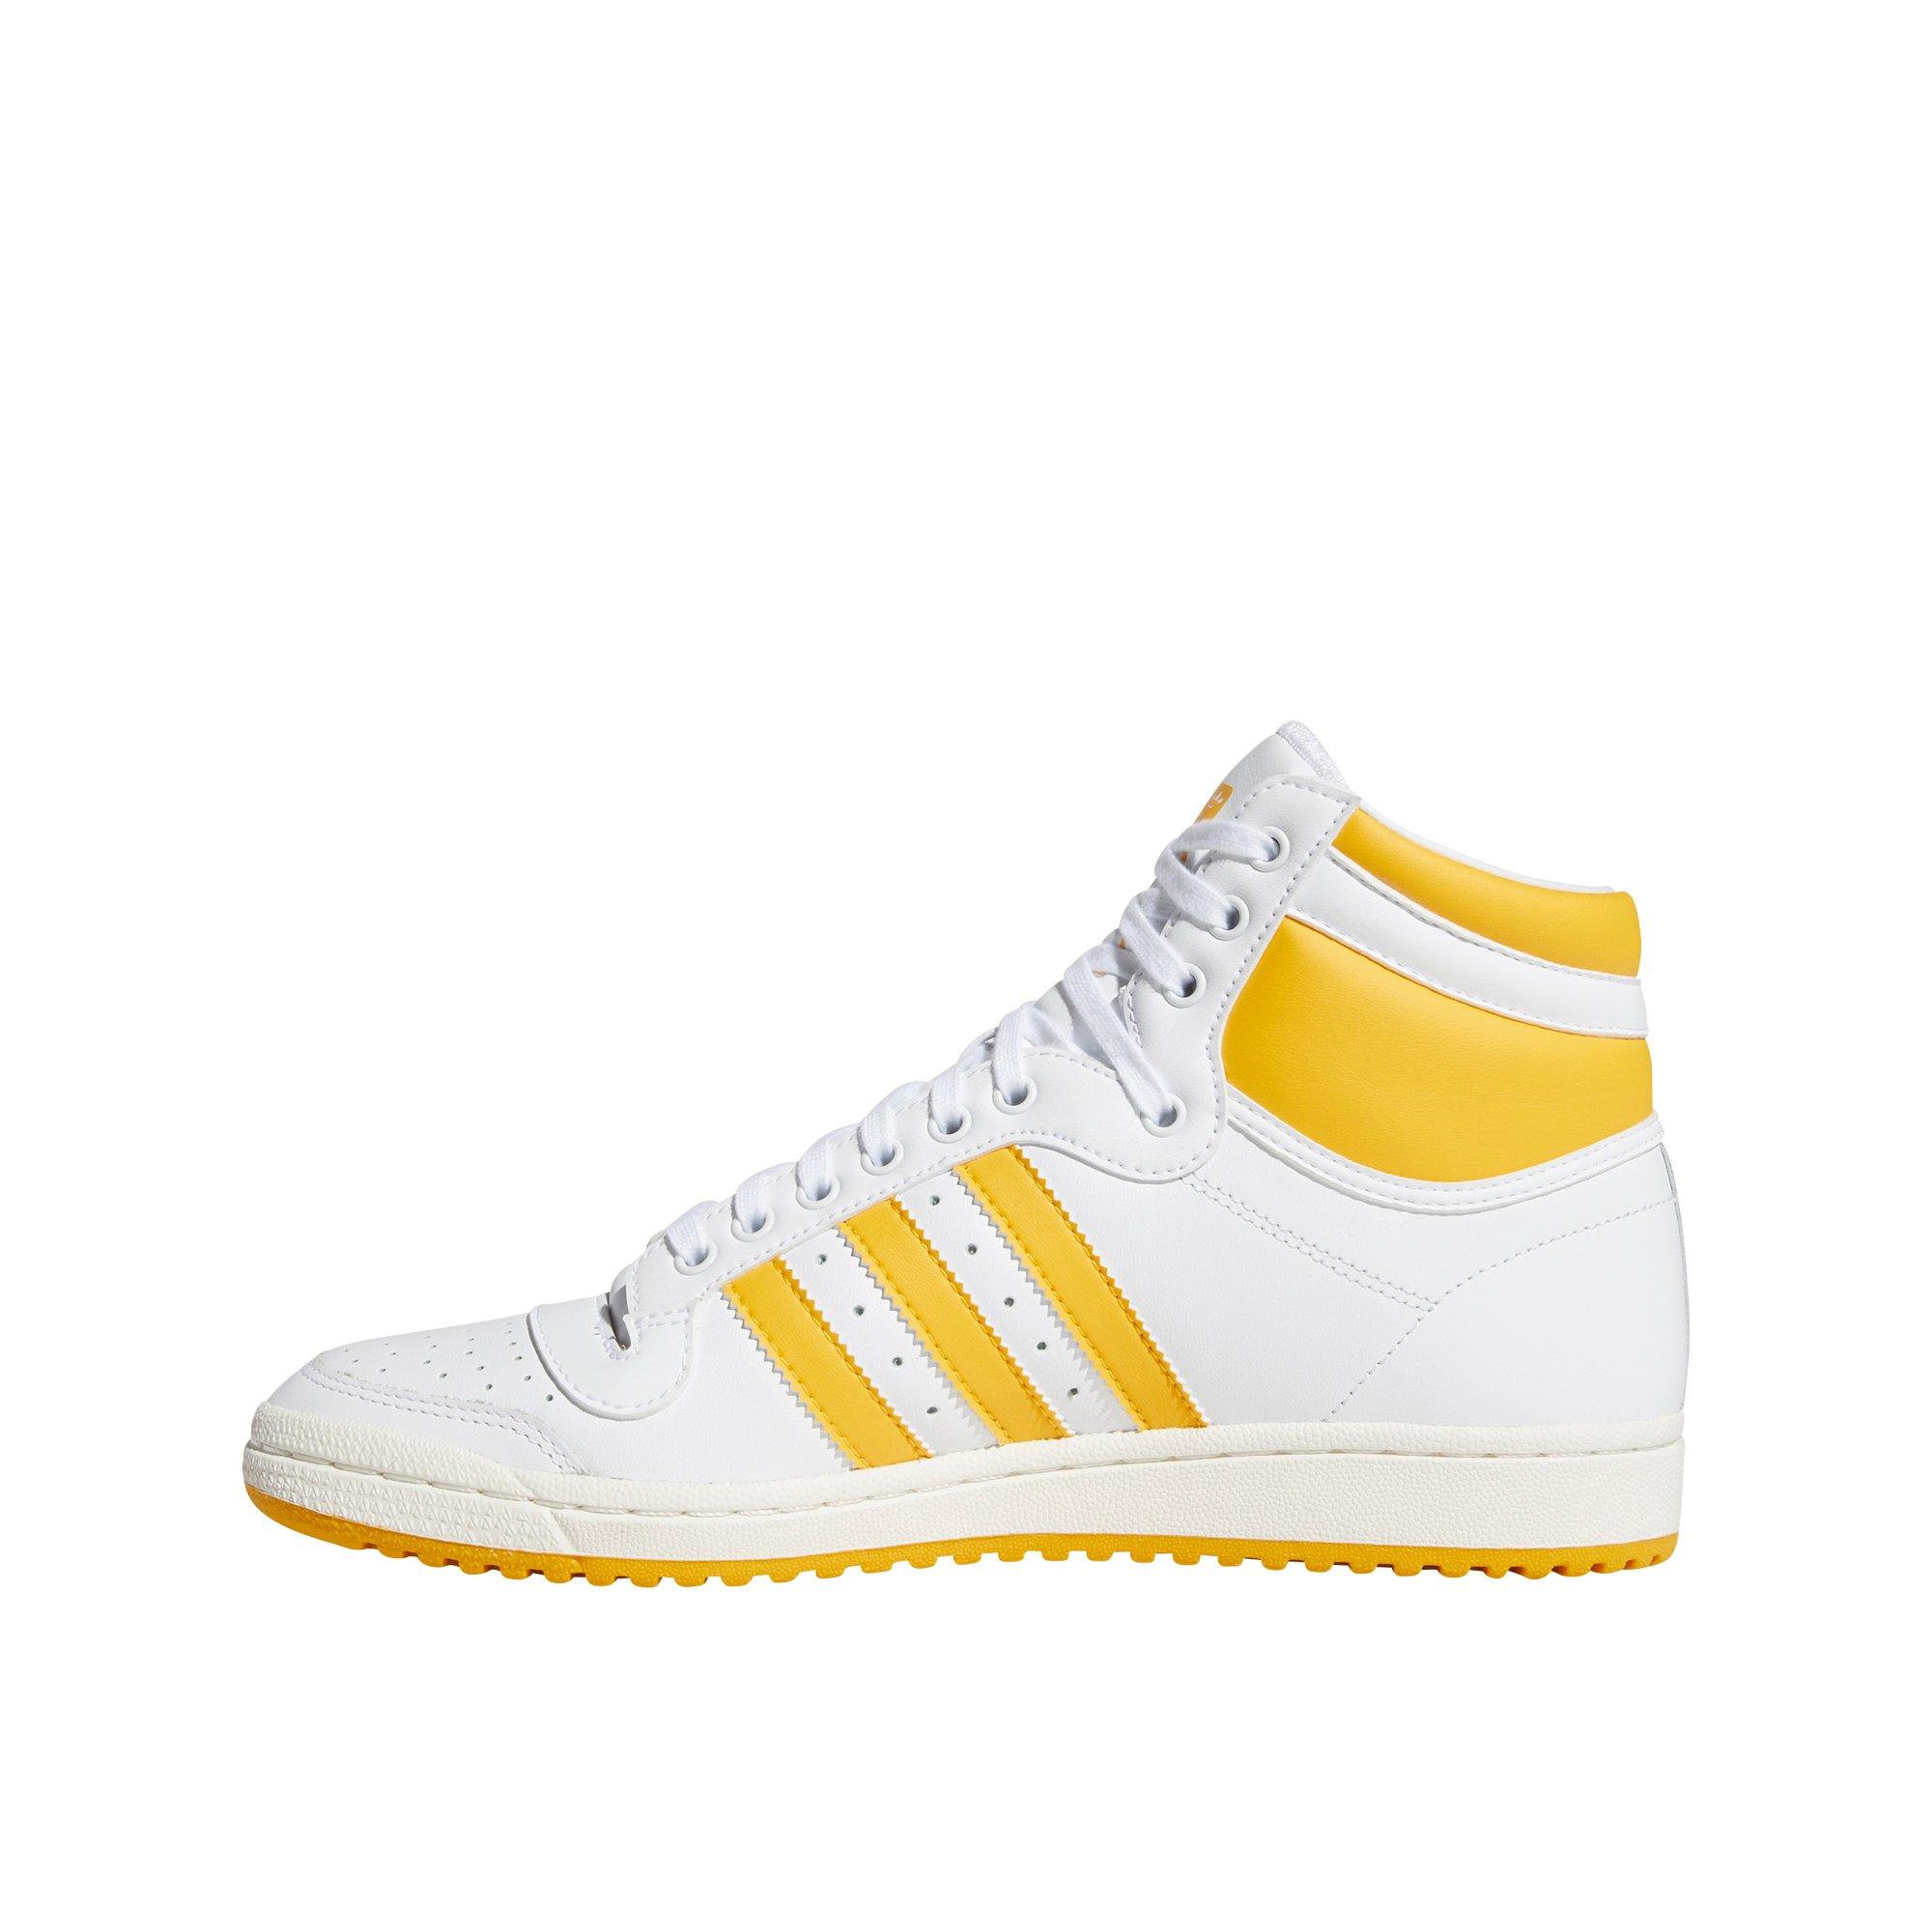 adidas top ten yellow and white